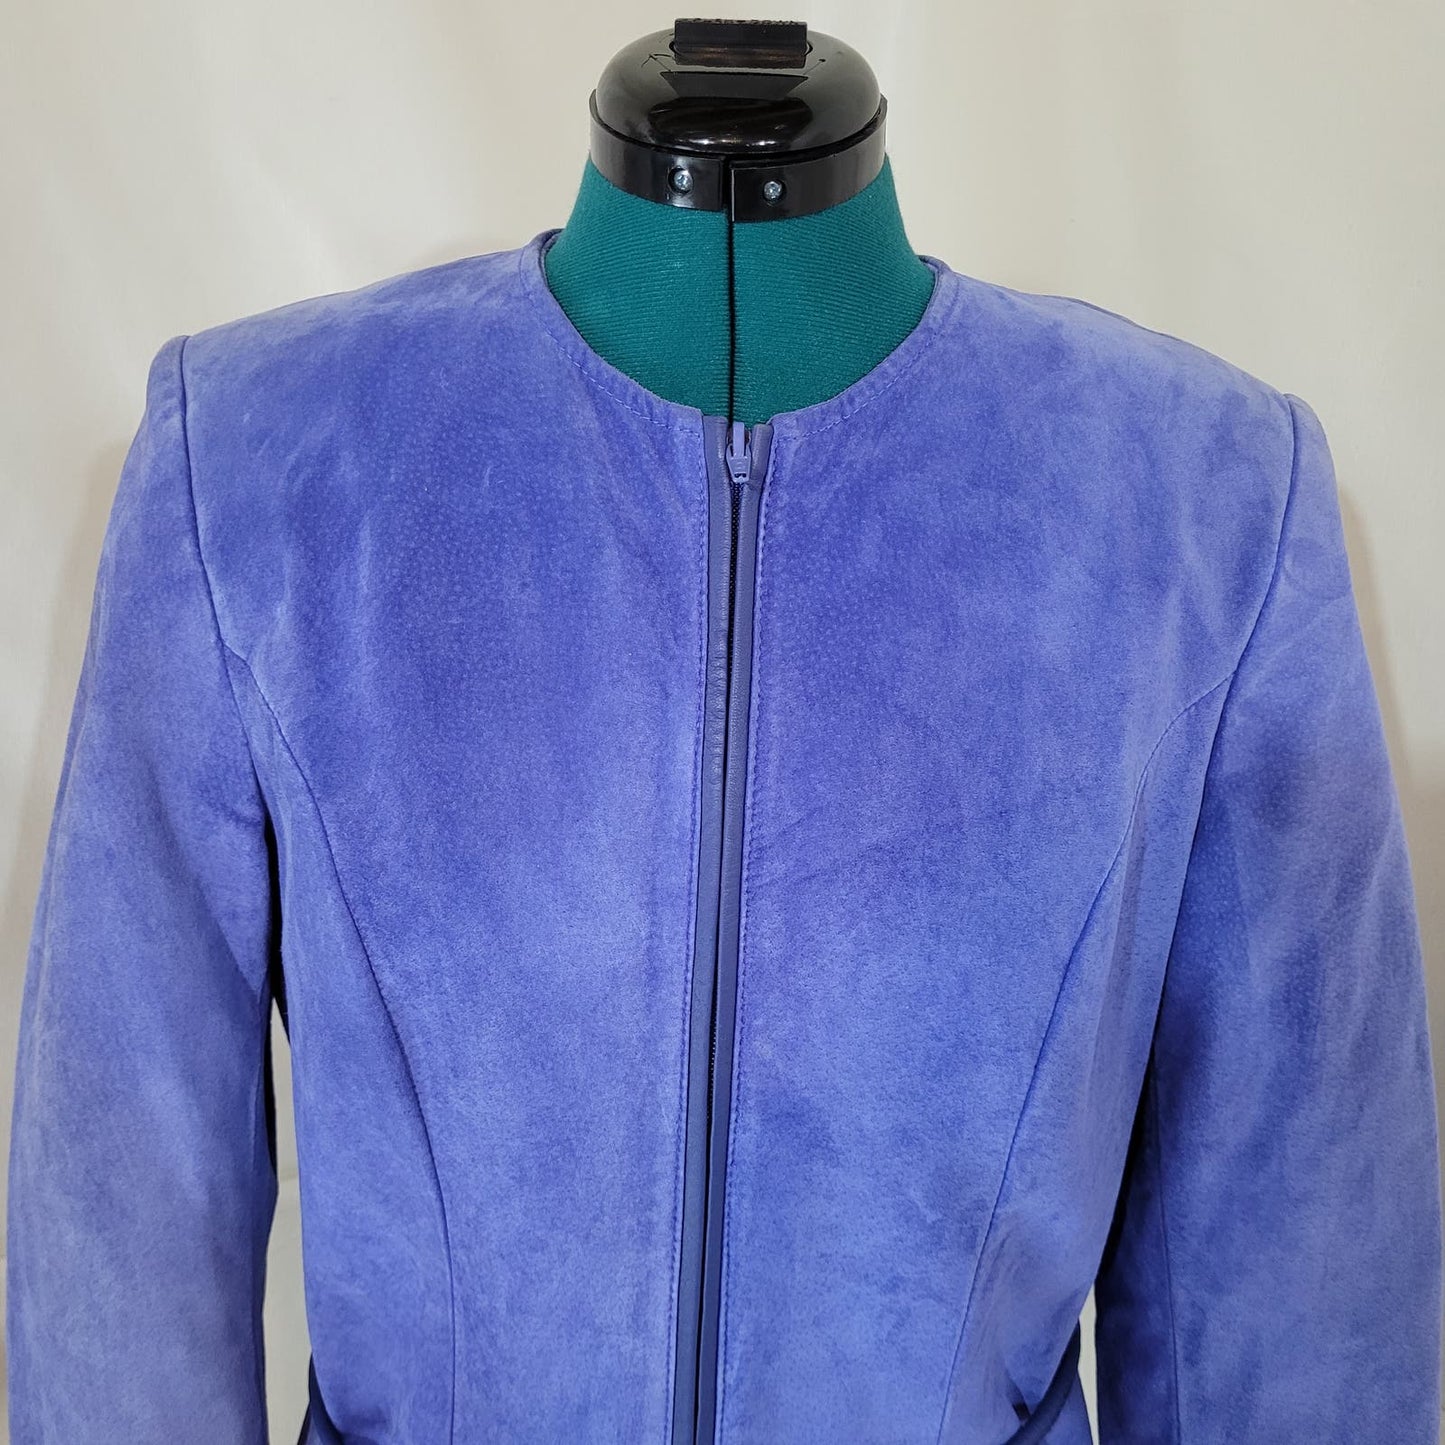 Vintage Danier Blue Leather Jacket - Size Small